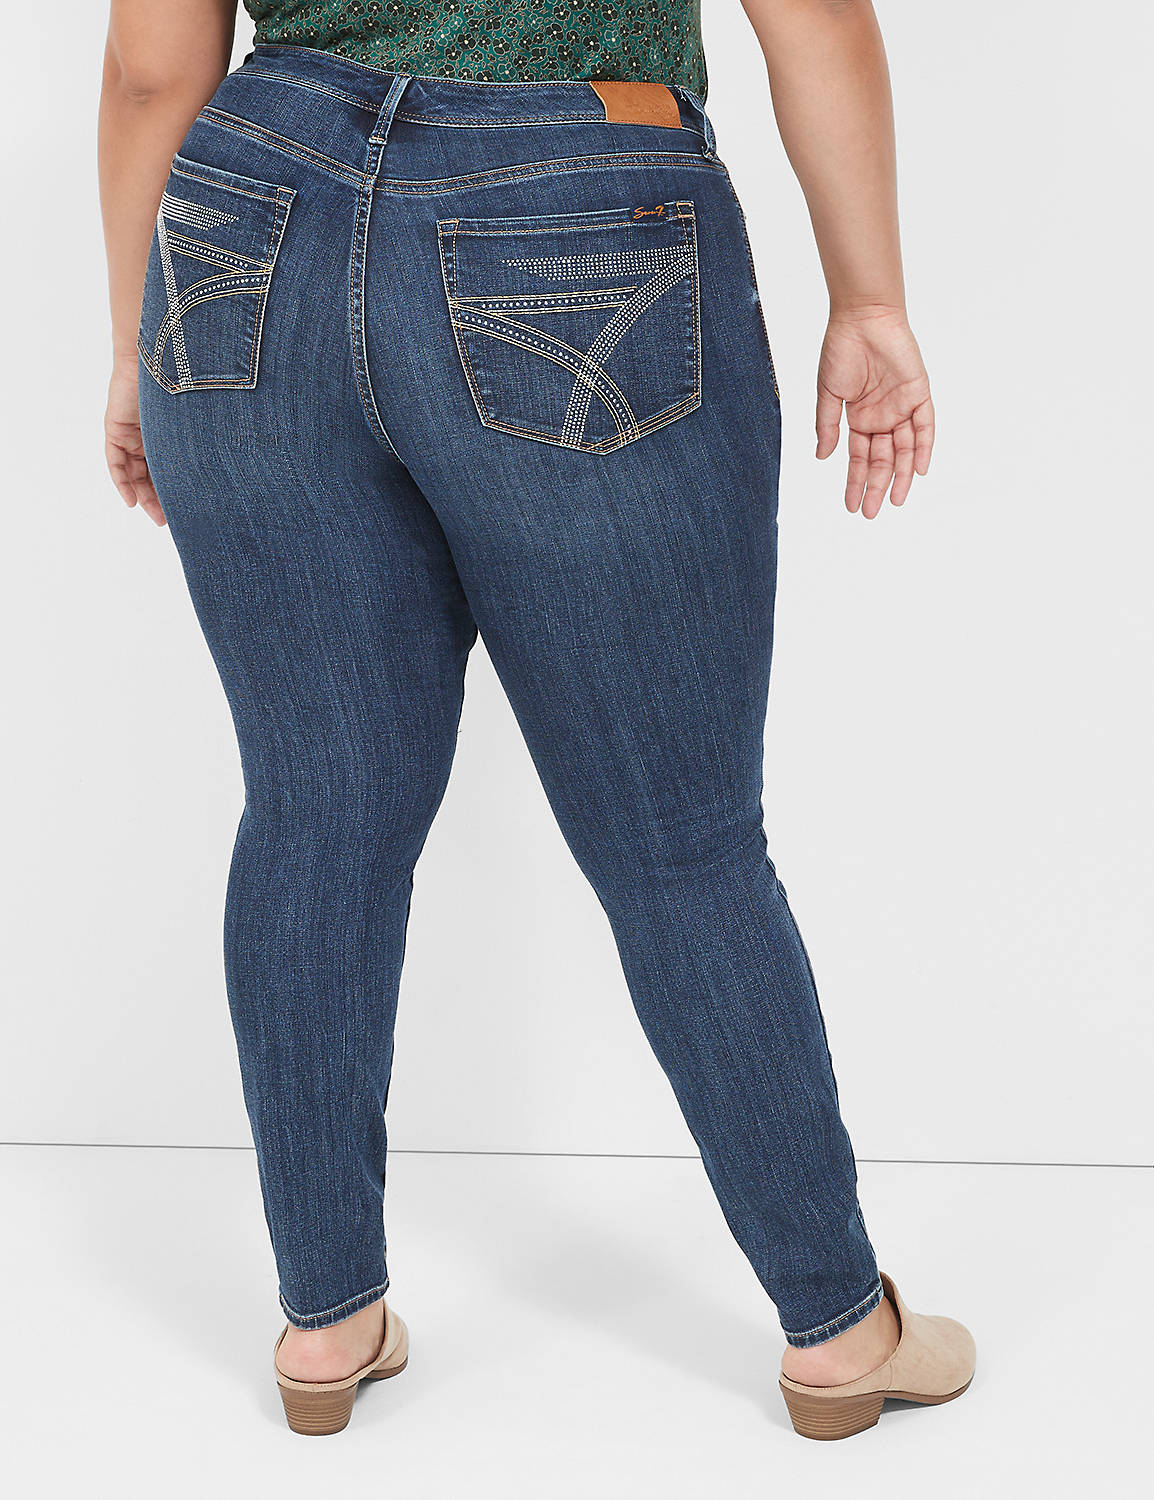 lane bryant seven7 skinny jean with back pocket embroidery 16 medium denim